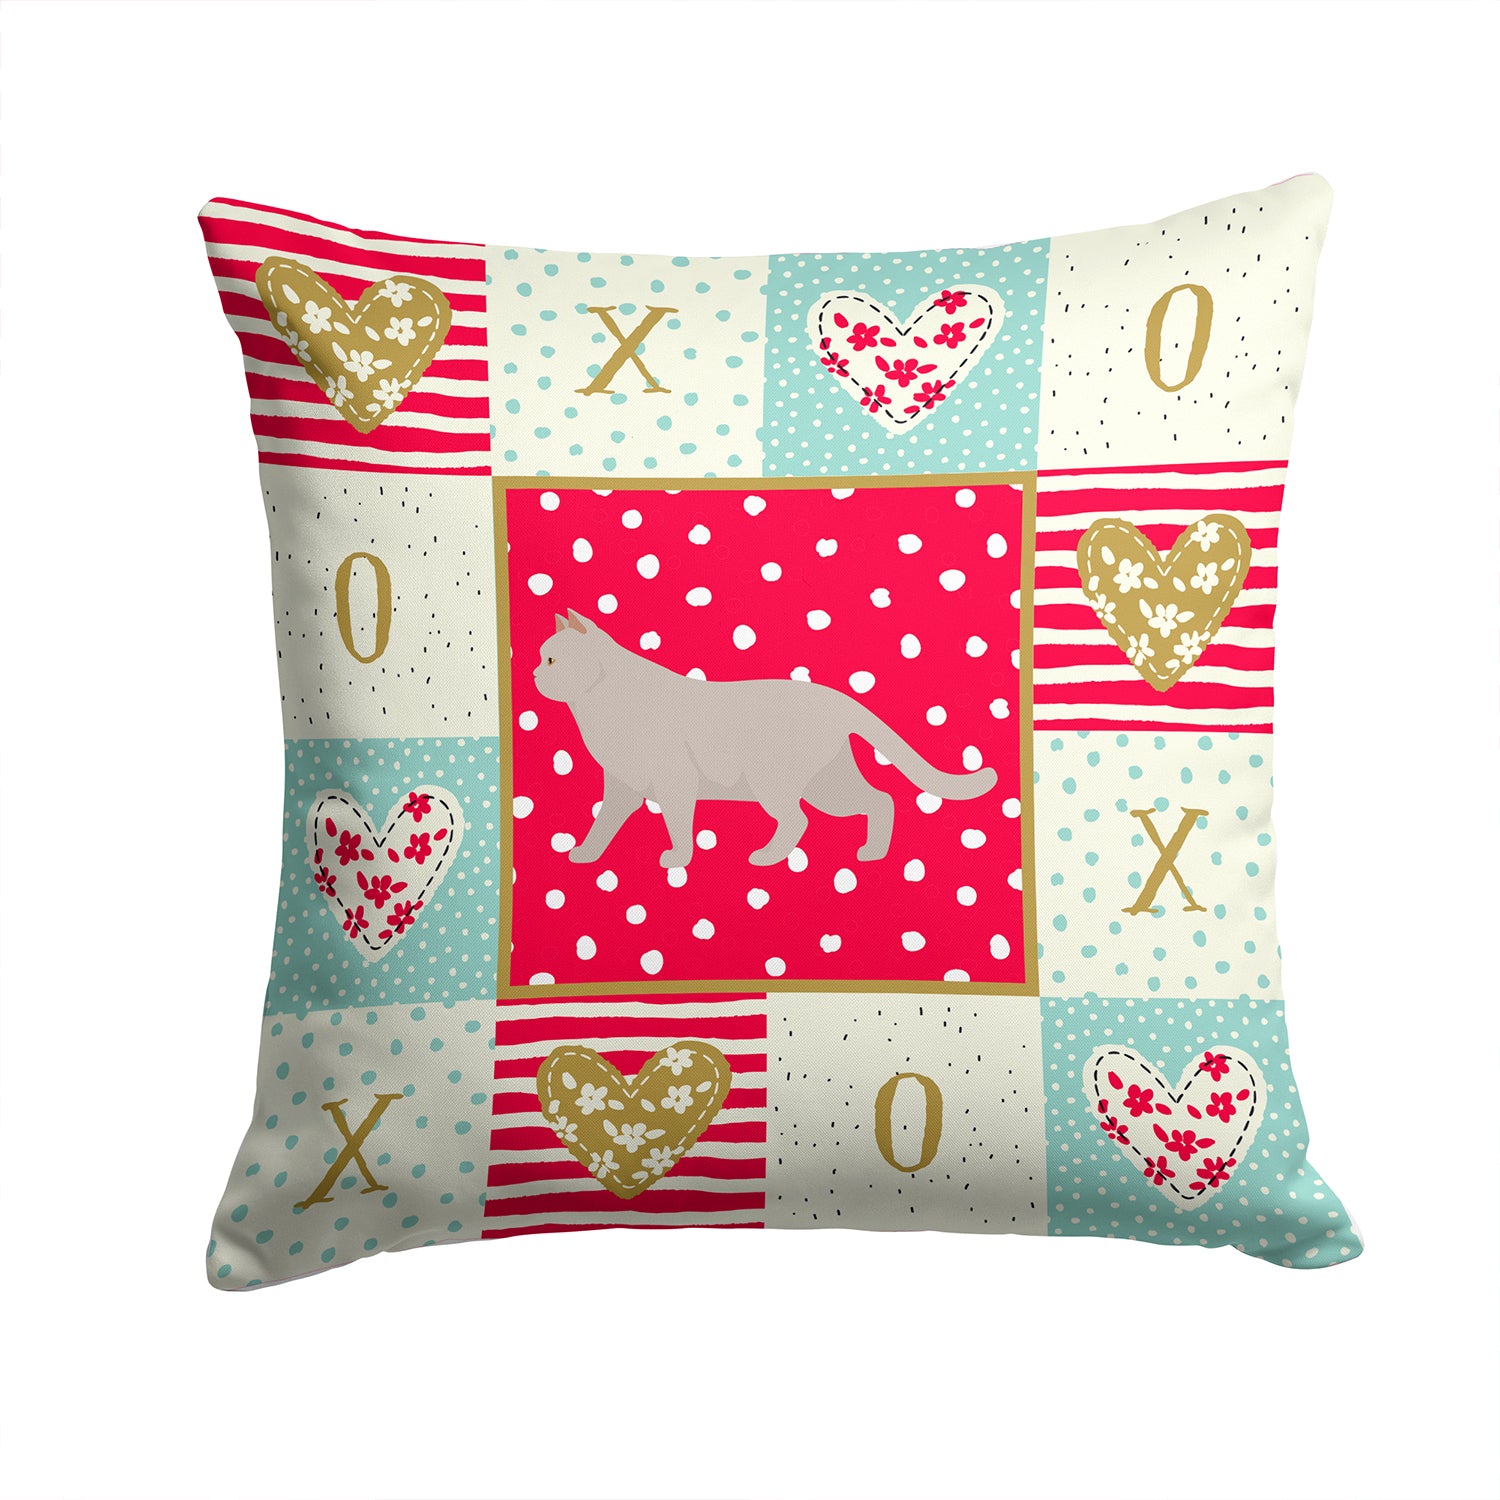 British Shorthair #2 Cat Love Fabric Decorative Pillow CK5569PW1414 - the-store.com